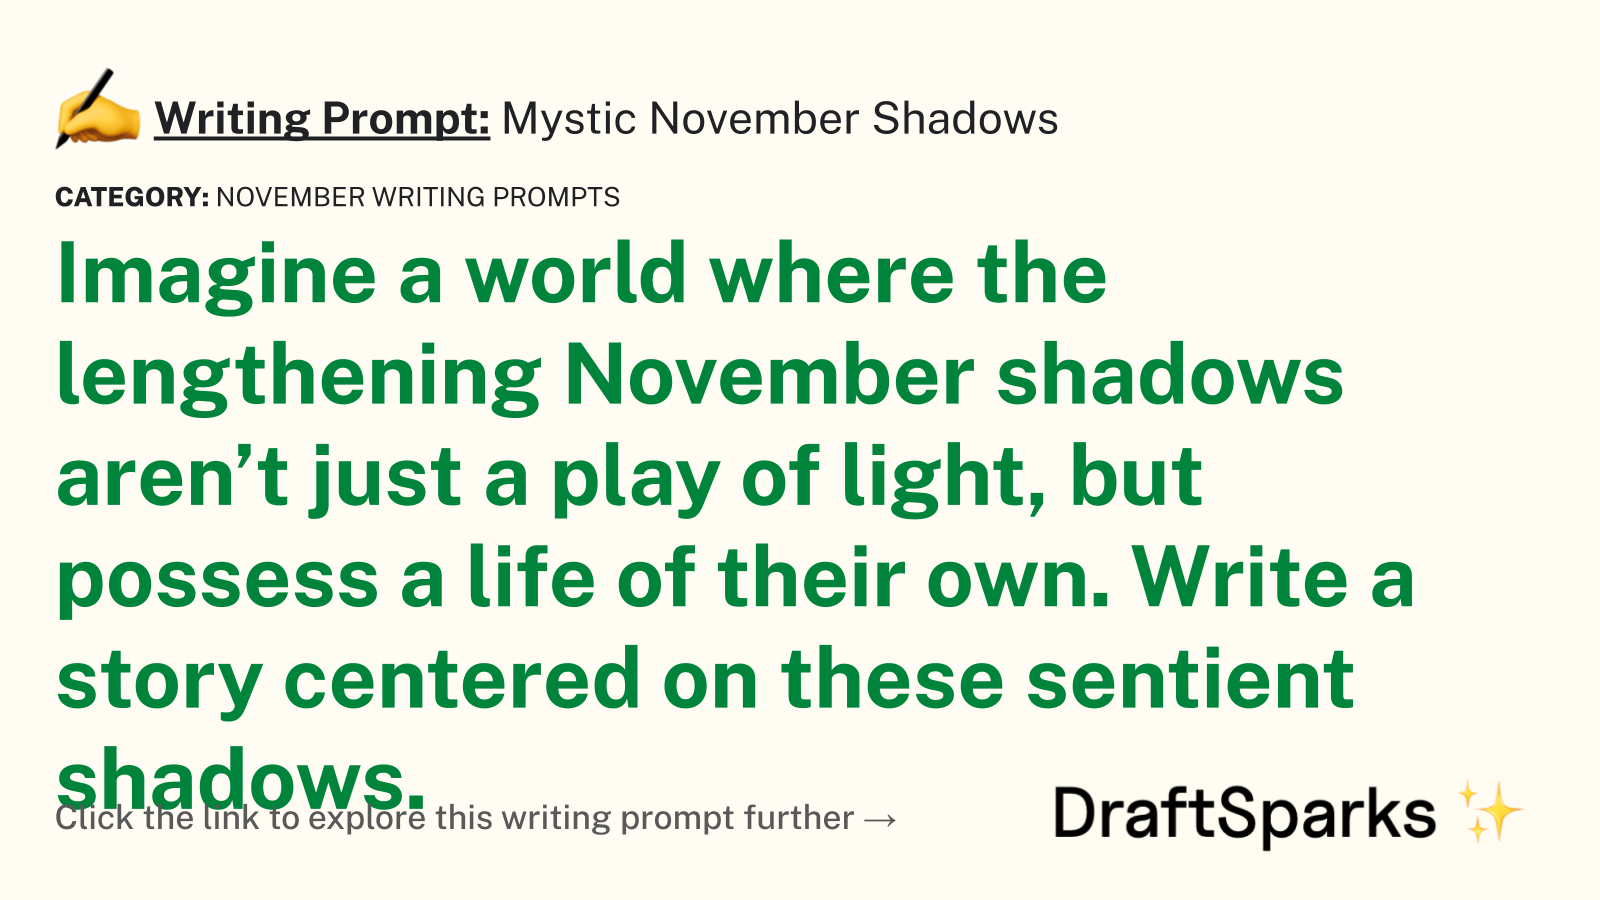 Mystic November Shadows